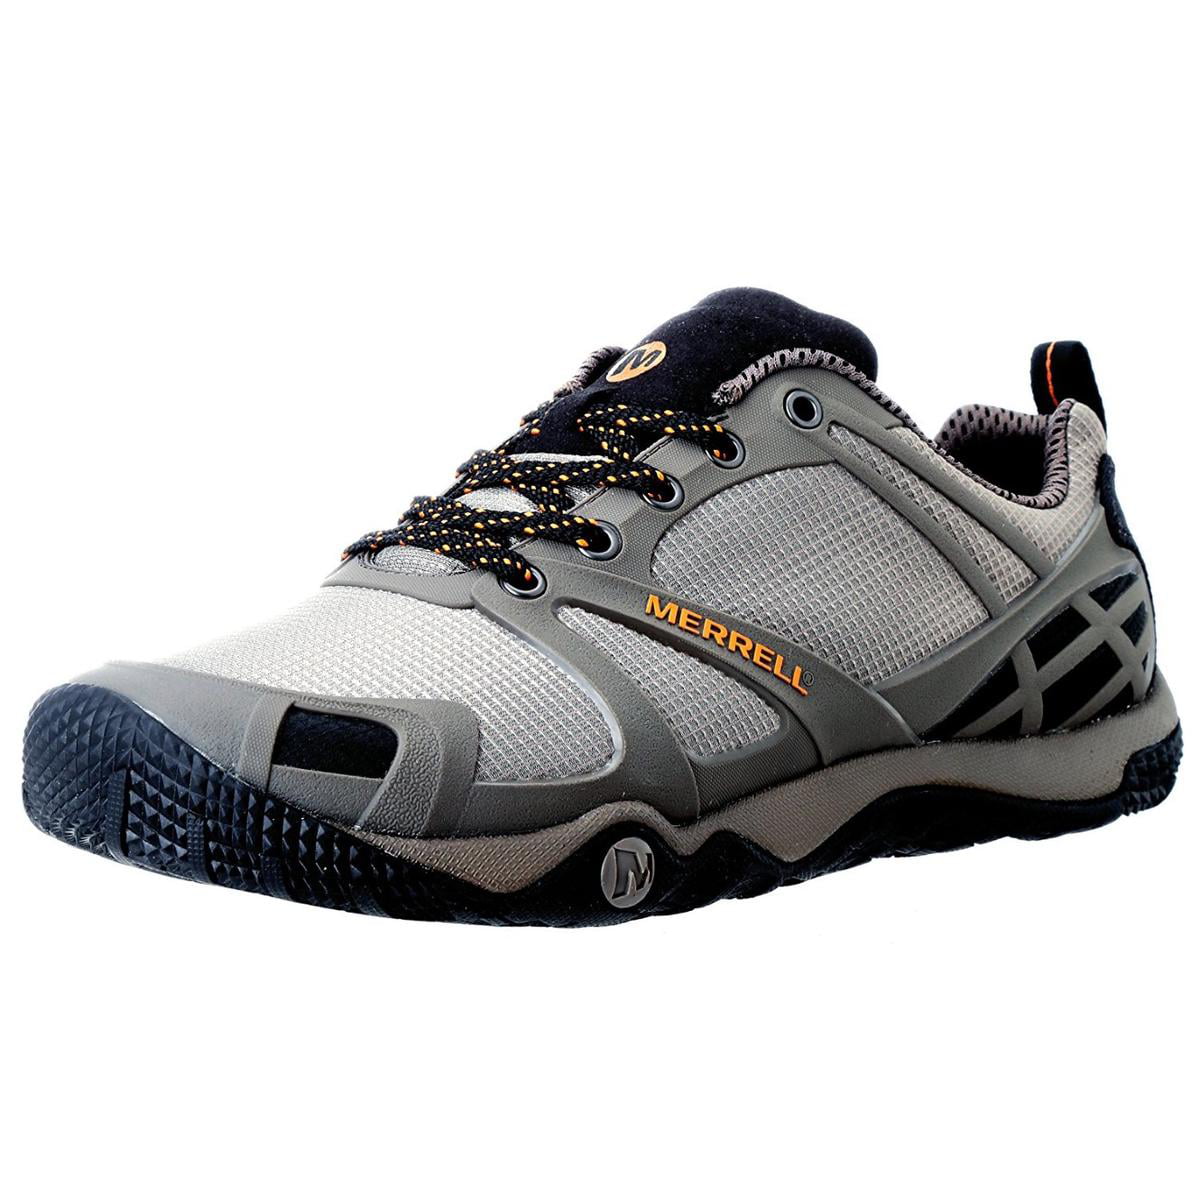 Merrell Proterra Sport Brindle Sneakers - Walmart.com